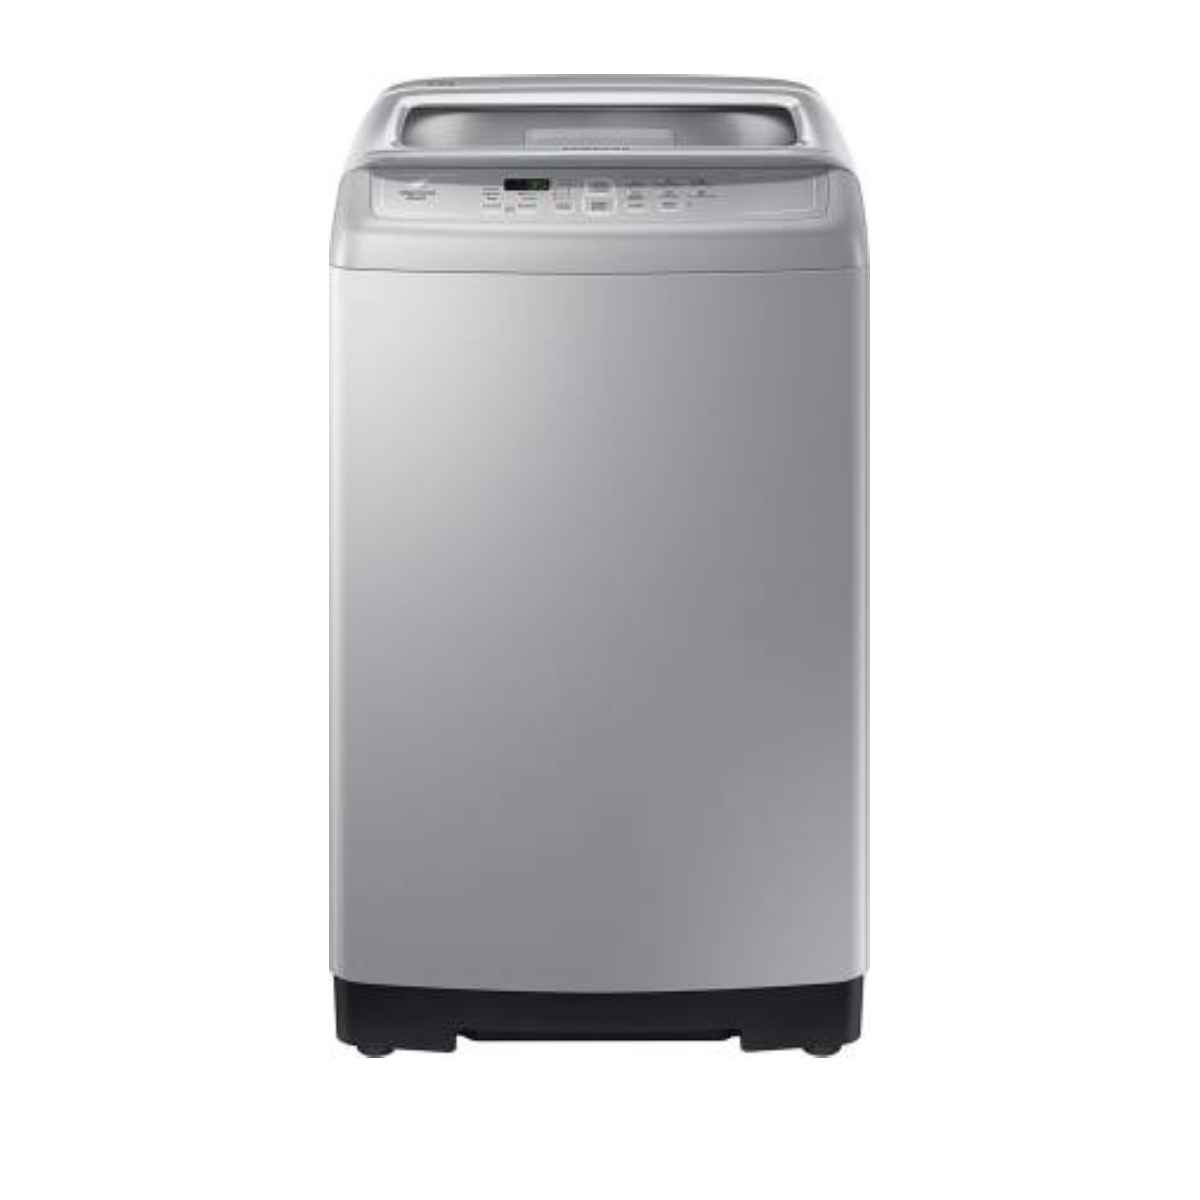 सैमसंग 6.2  Fully Automatic टॉप Load Washing Machine Grey (WA62M4100HY/TL) 